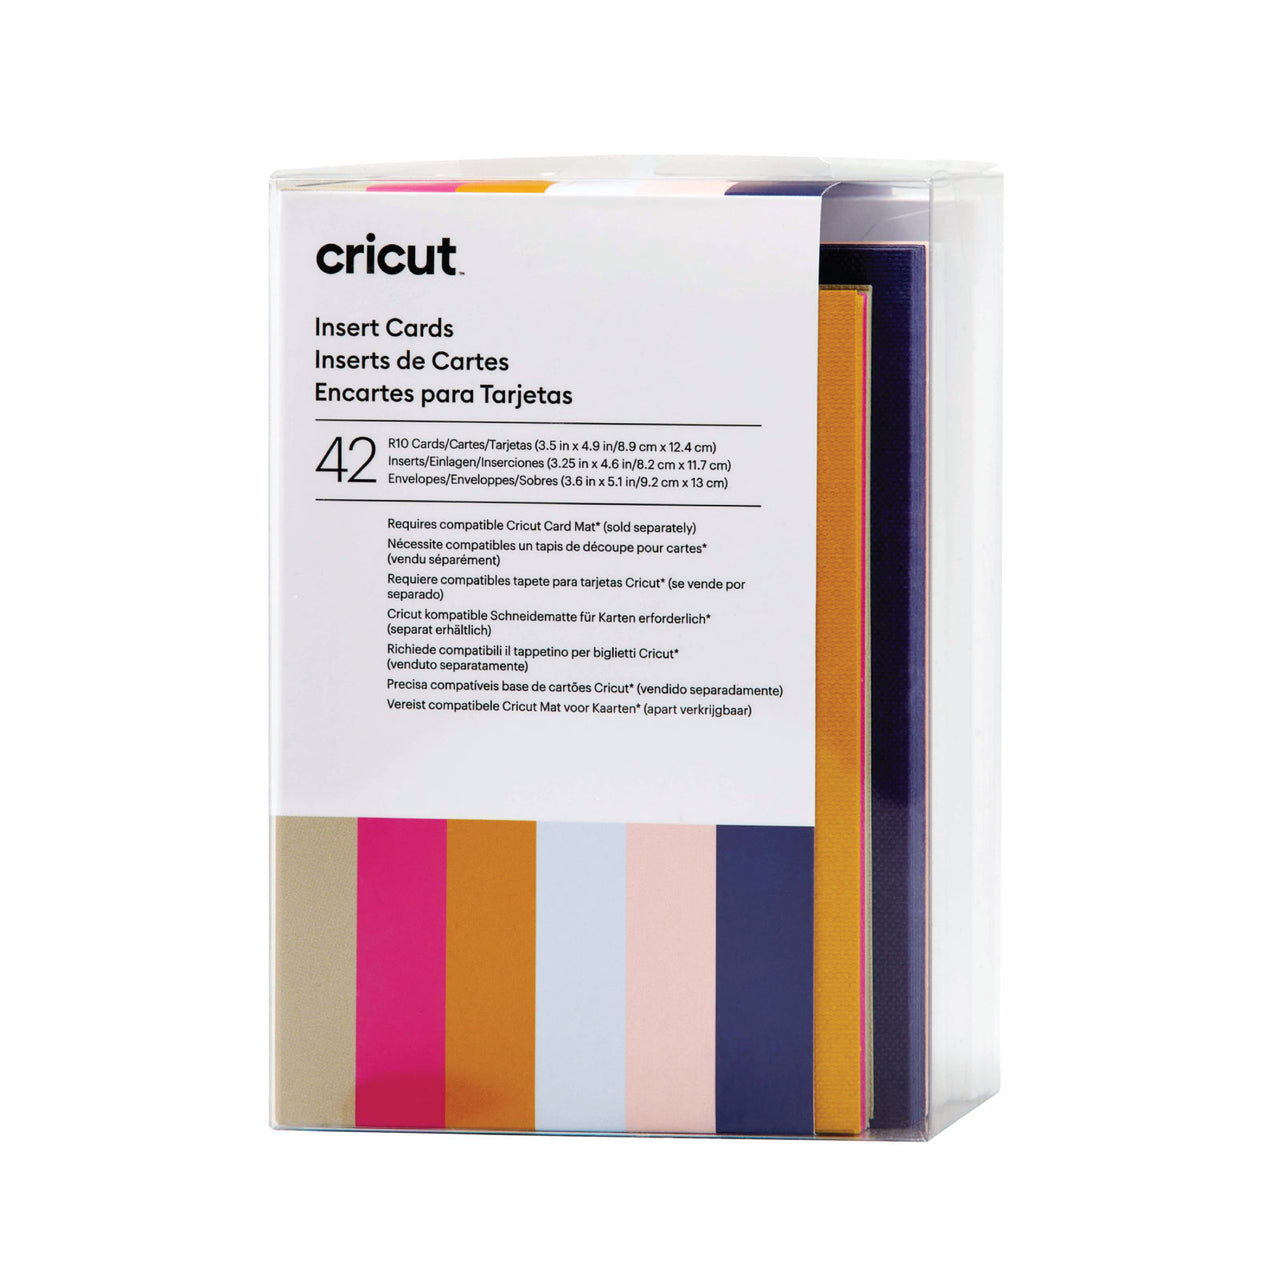 Cricut Insert Cards, Sensei Sampler - R10 (42 ct) - Damaged Package